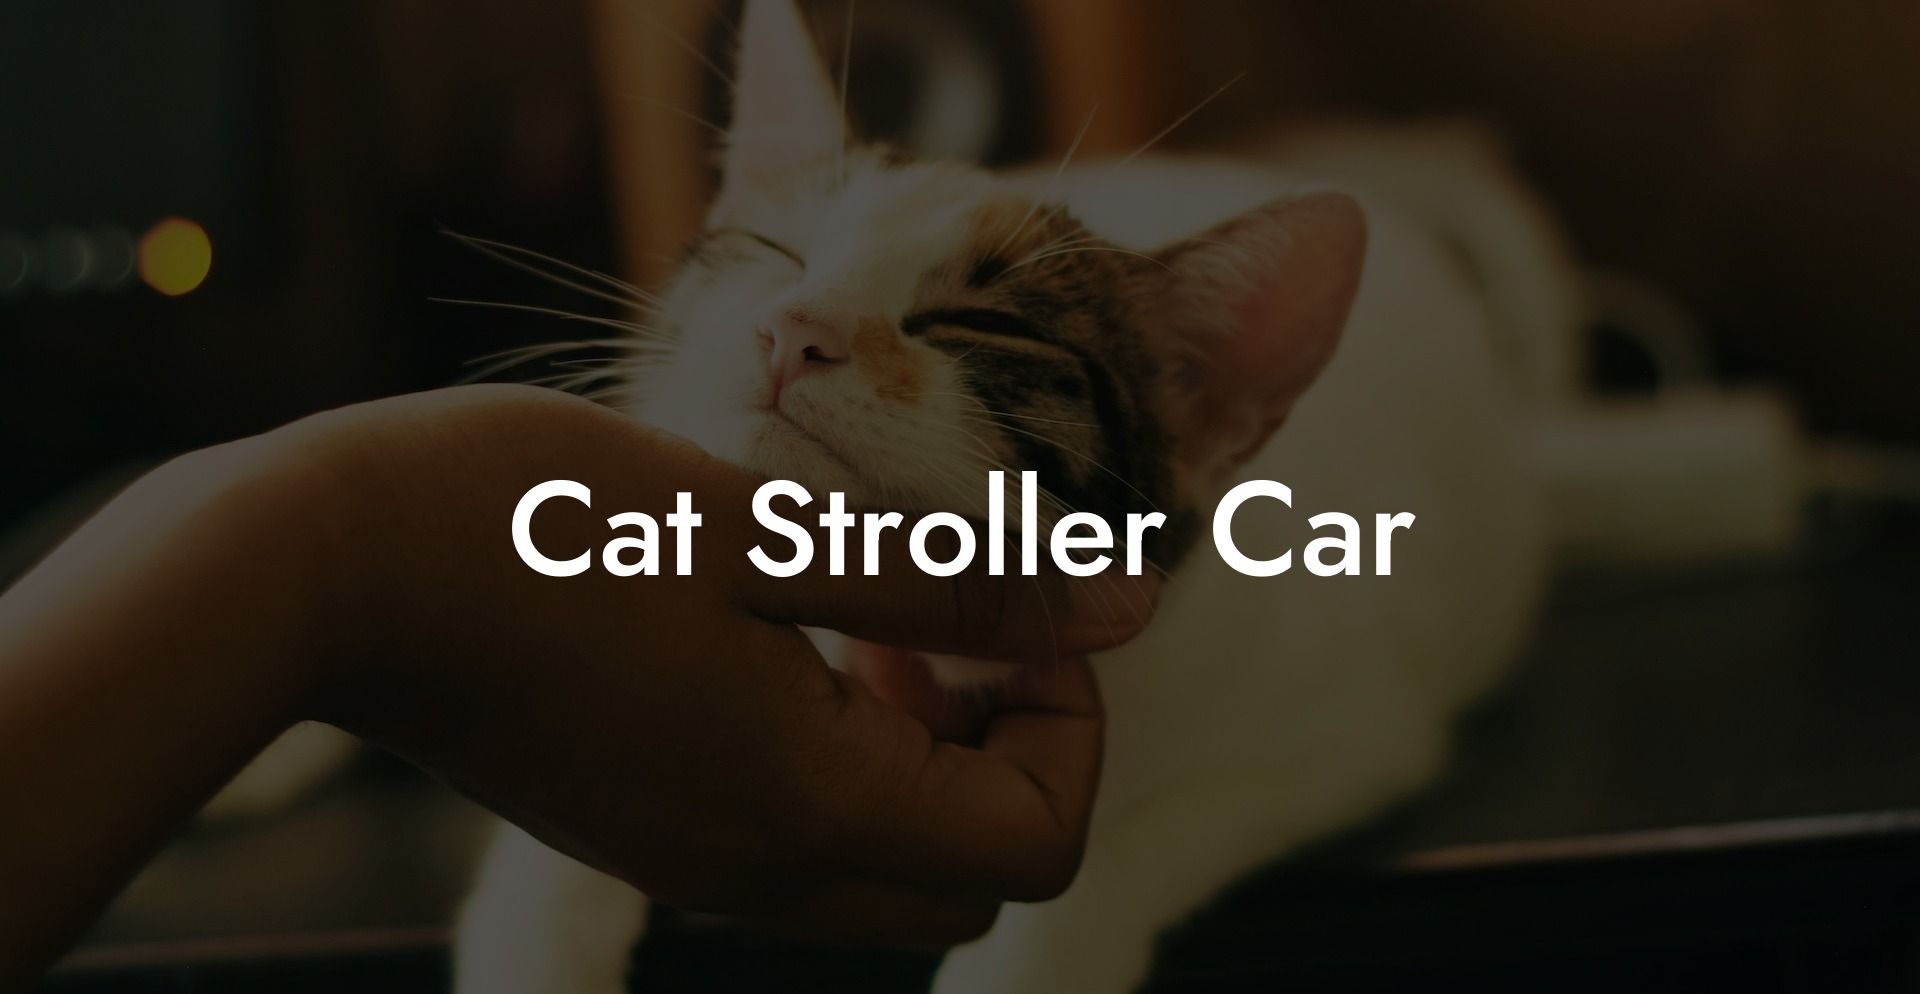 Cat Stroller Car